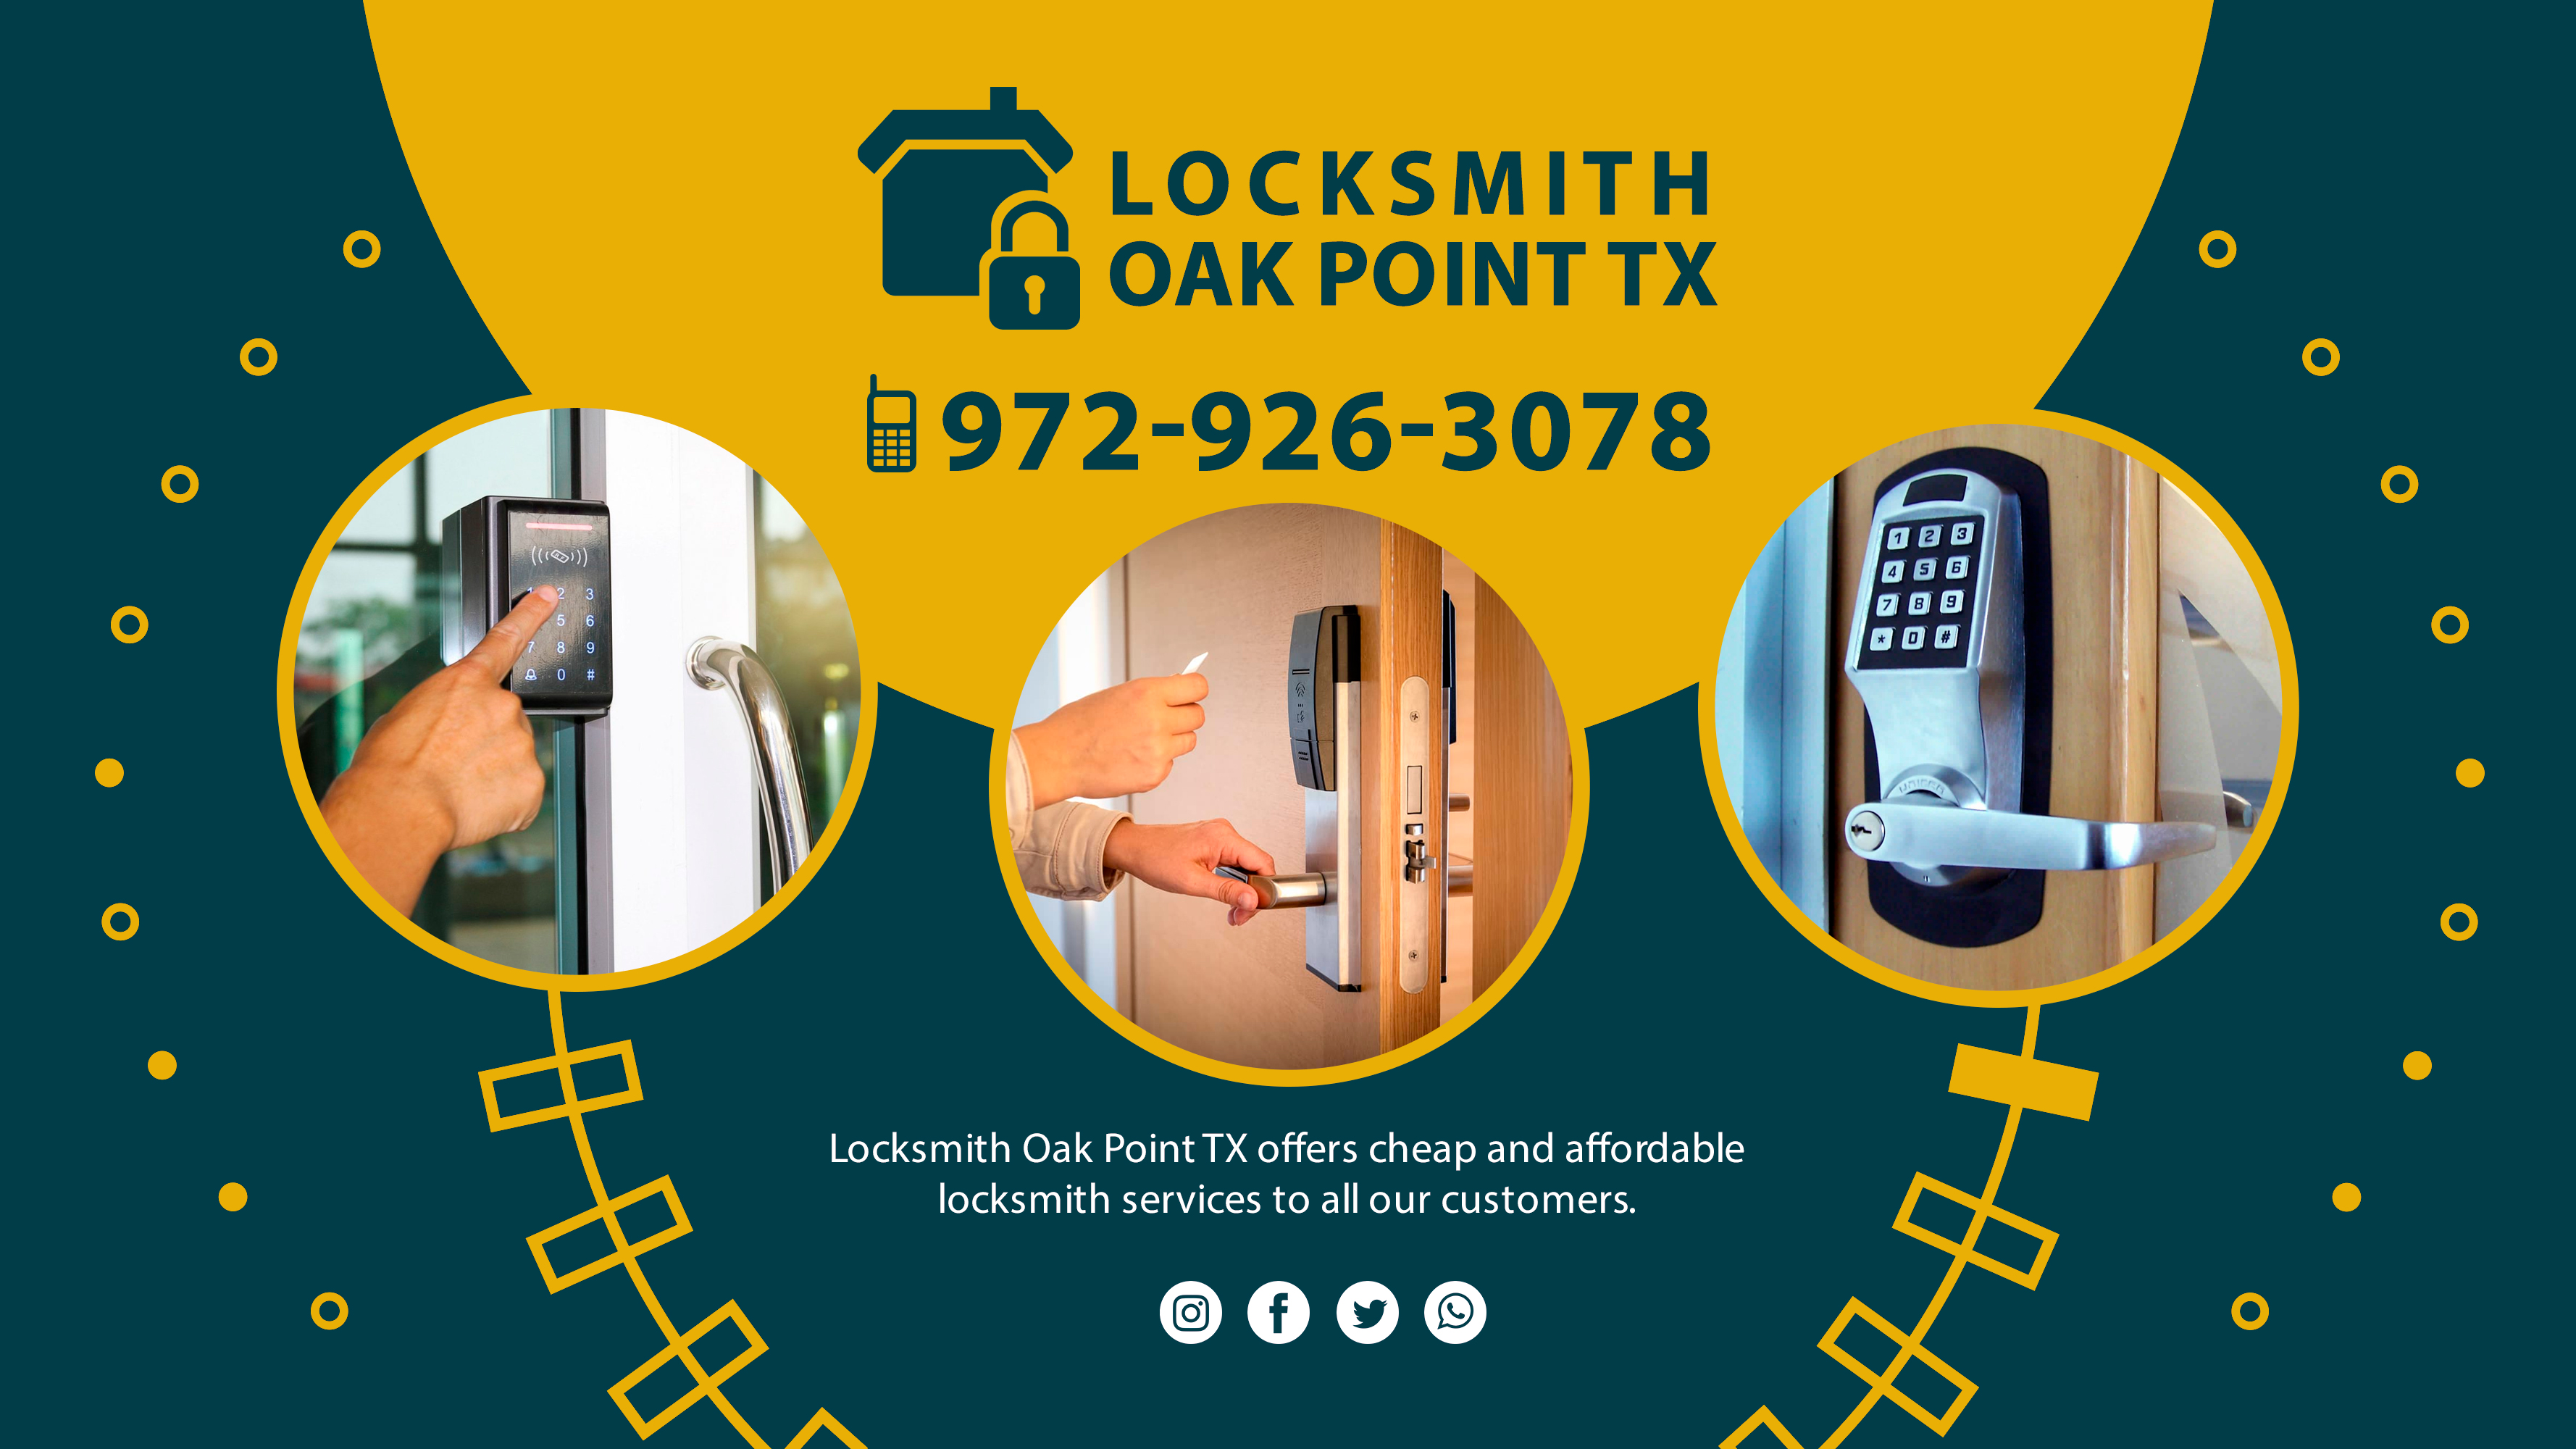 Locksmith Oak Point TX - Best Locks and Keys Service